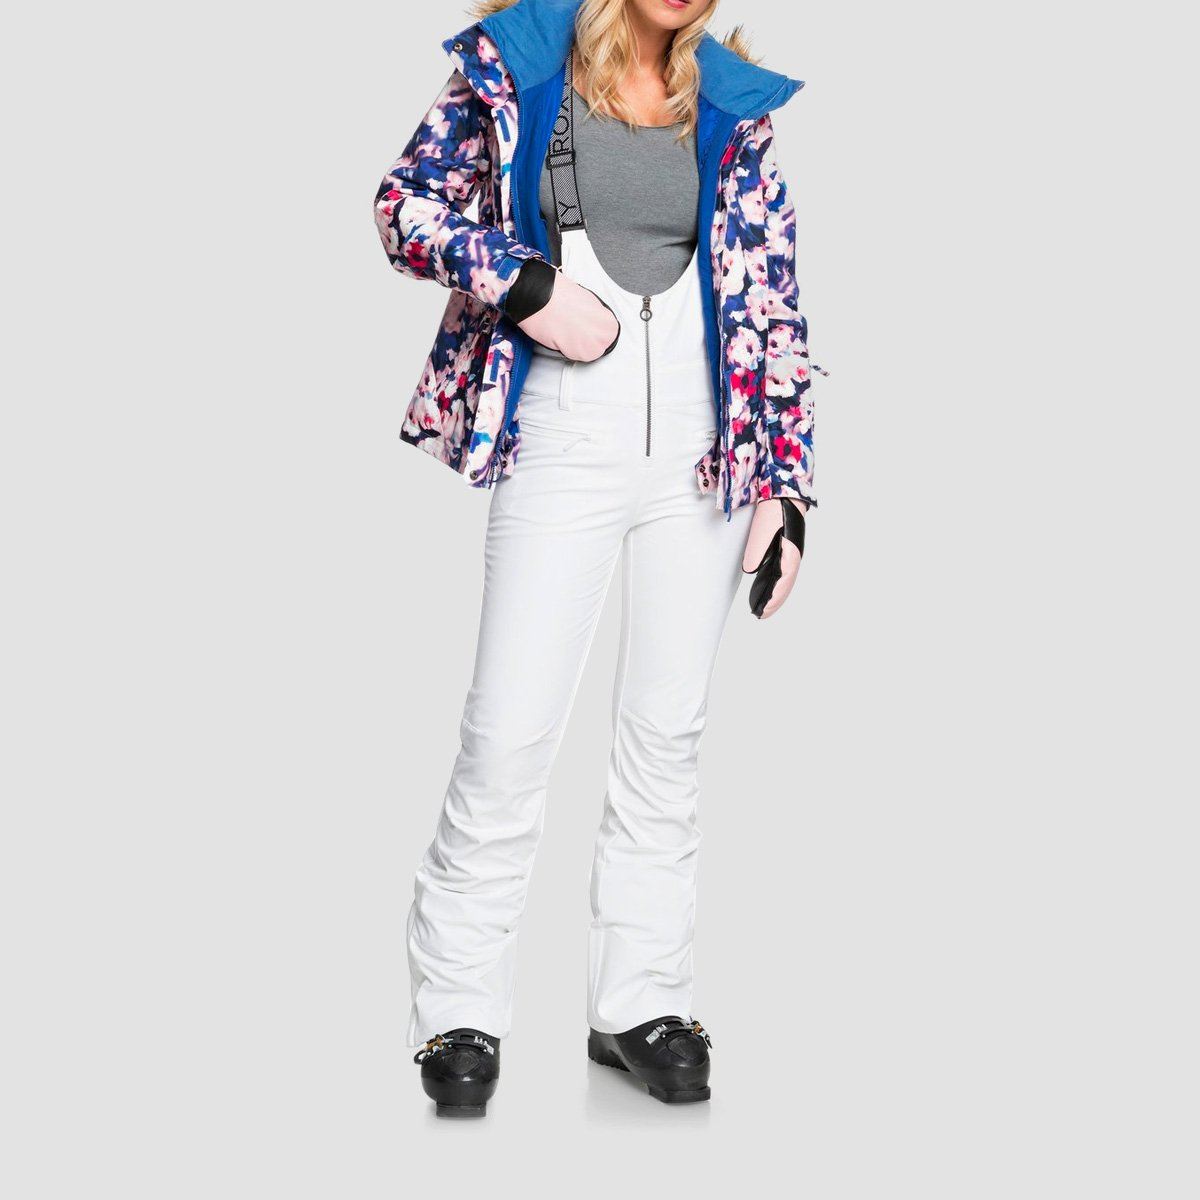 Roxy Summit Snow Bib Pants Bright White - Womens